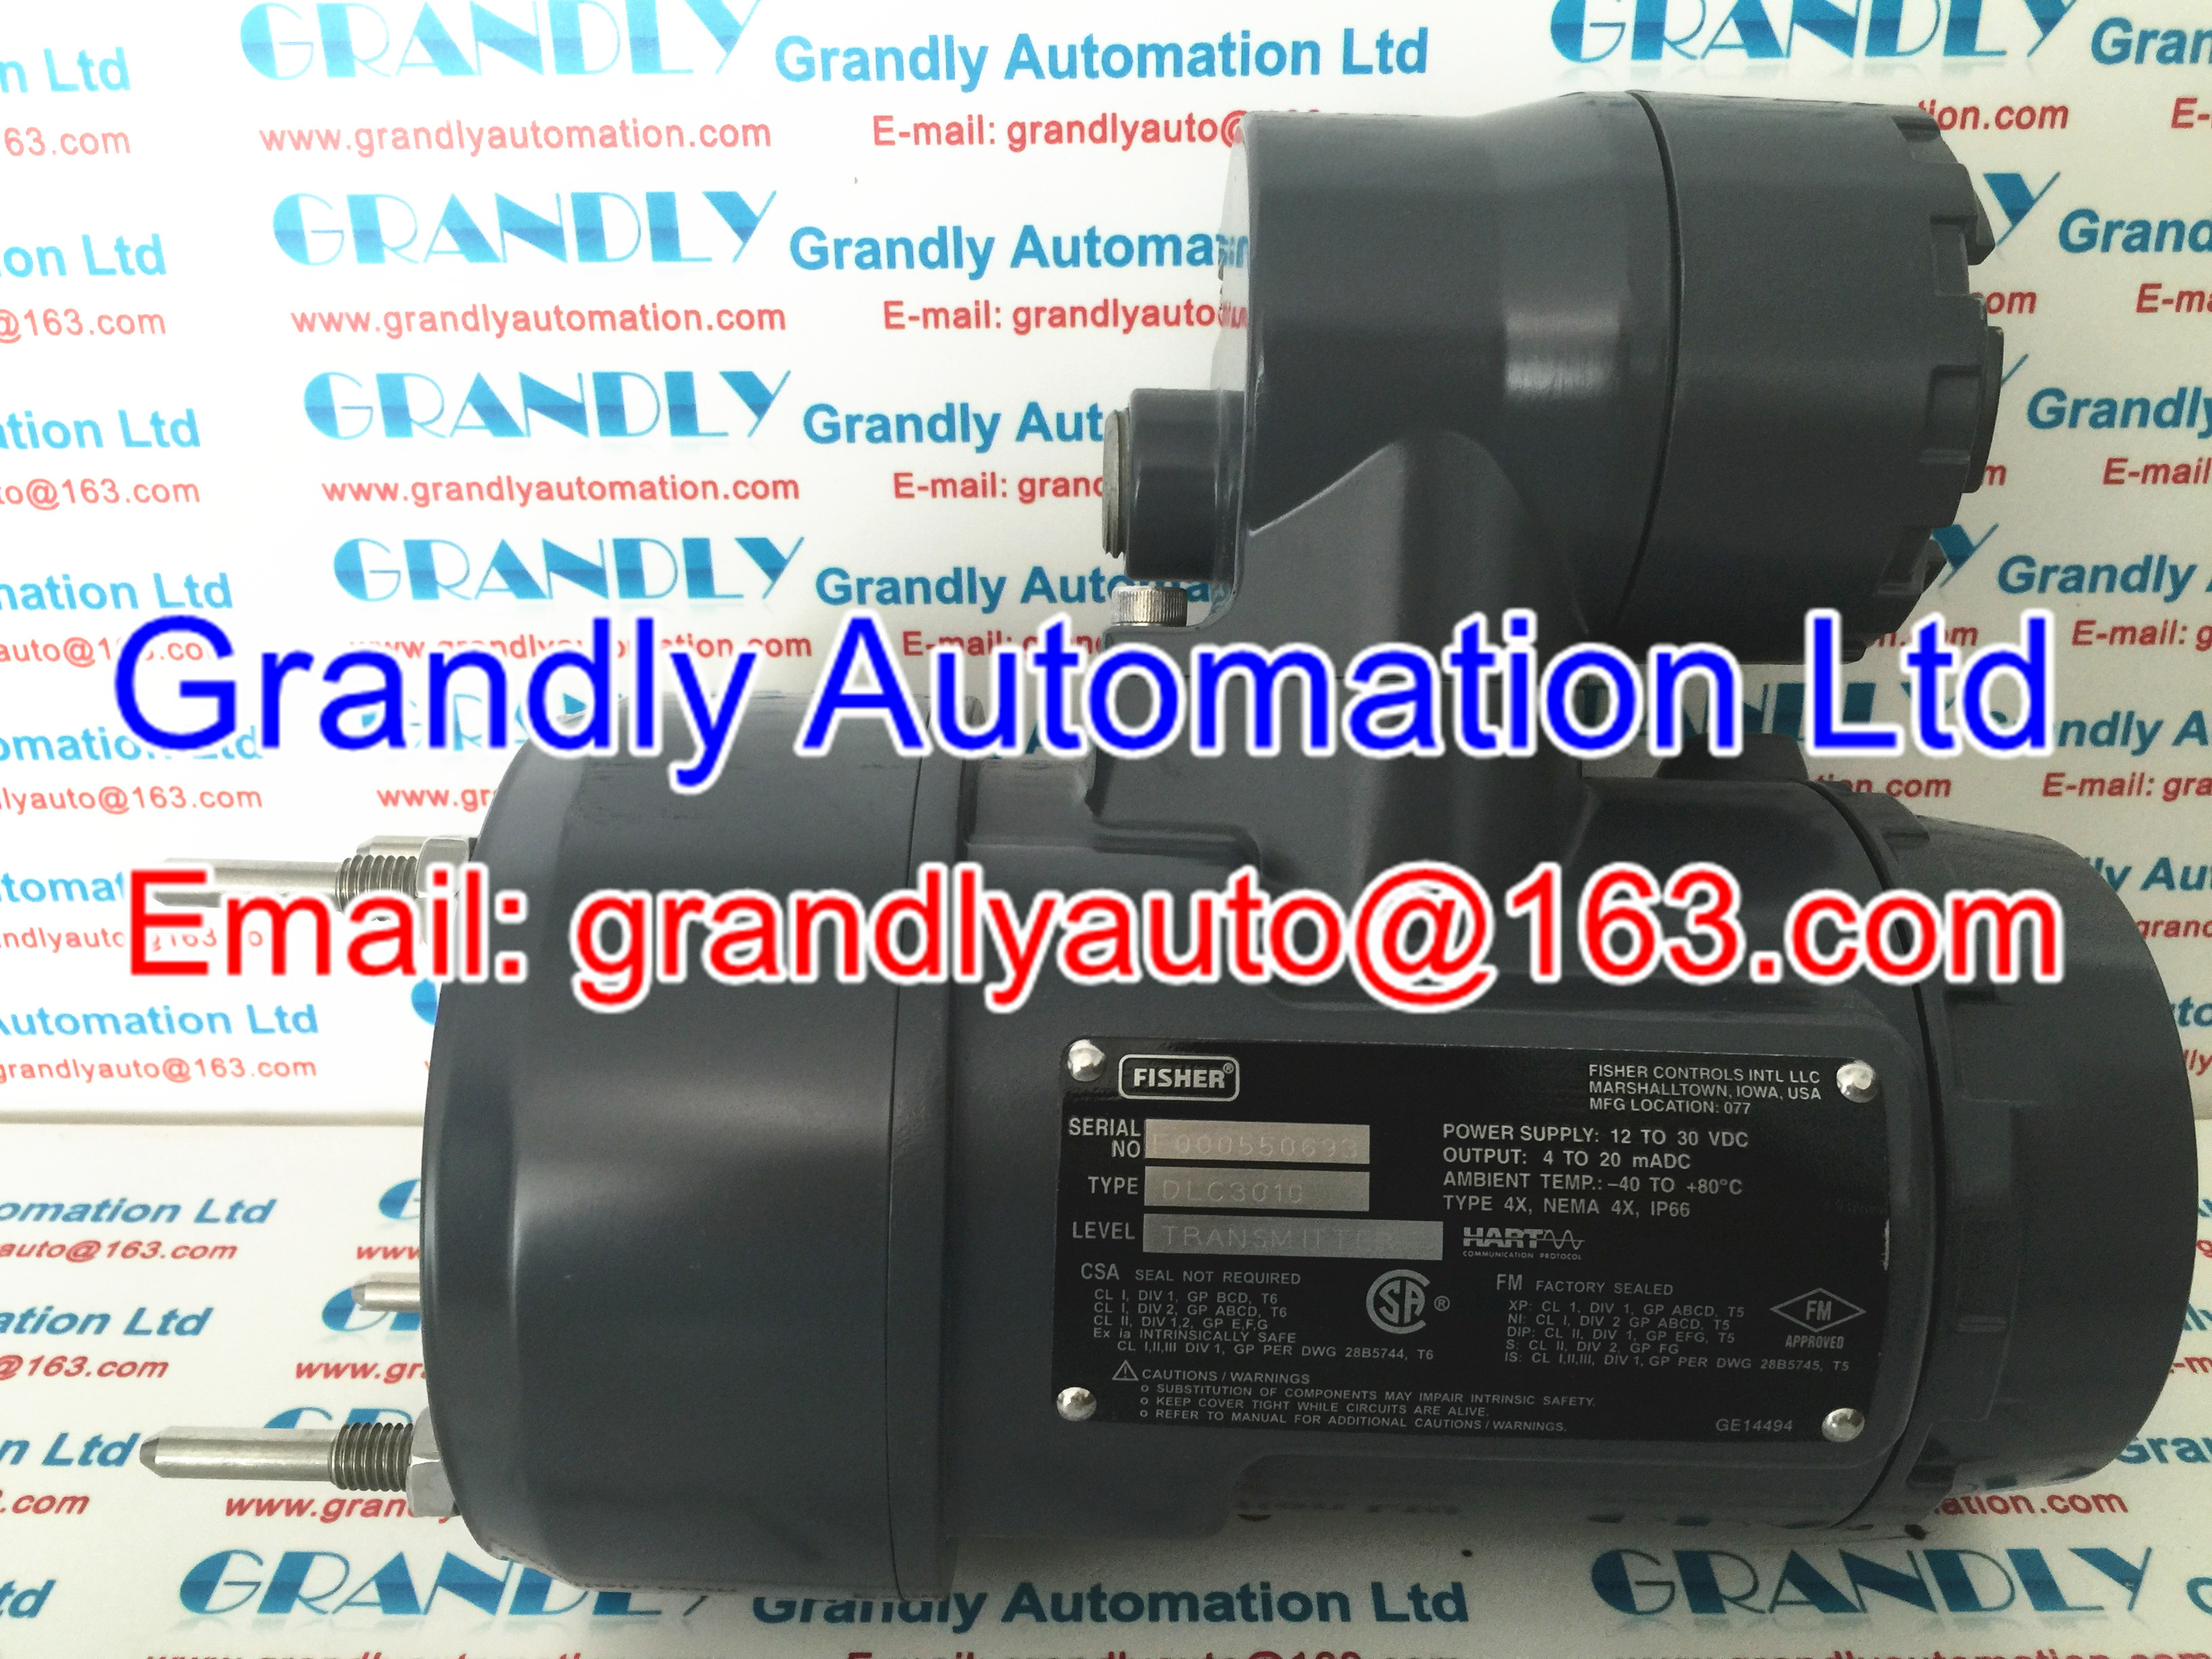 Supply *New in Box* Fisher Fieldvue DLC3010 Digital Level Controller - grandlyauto@163.com